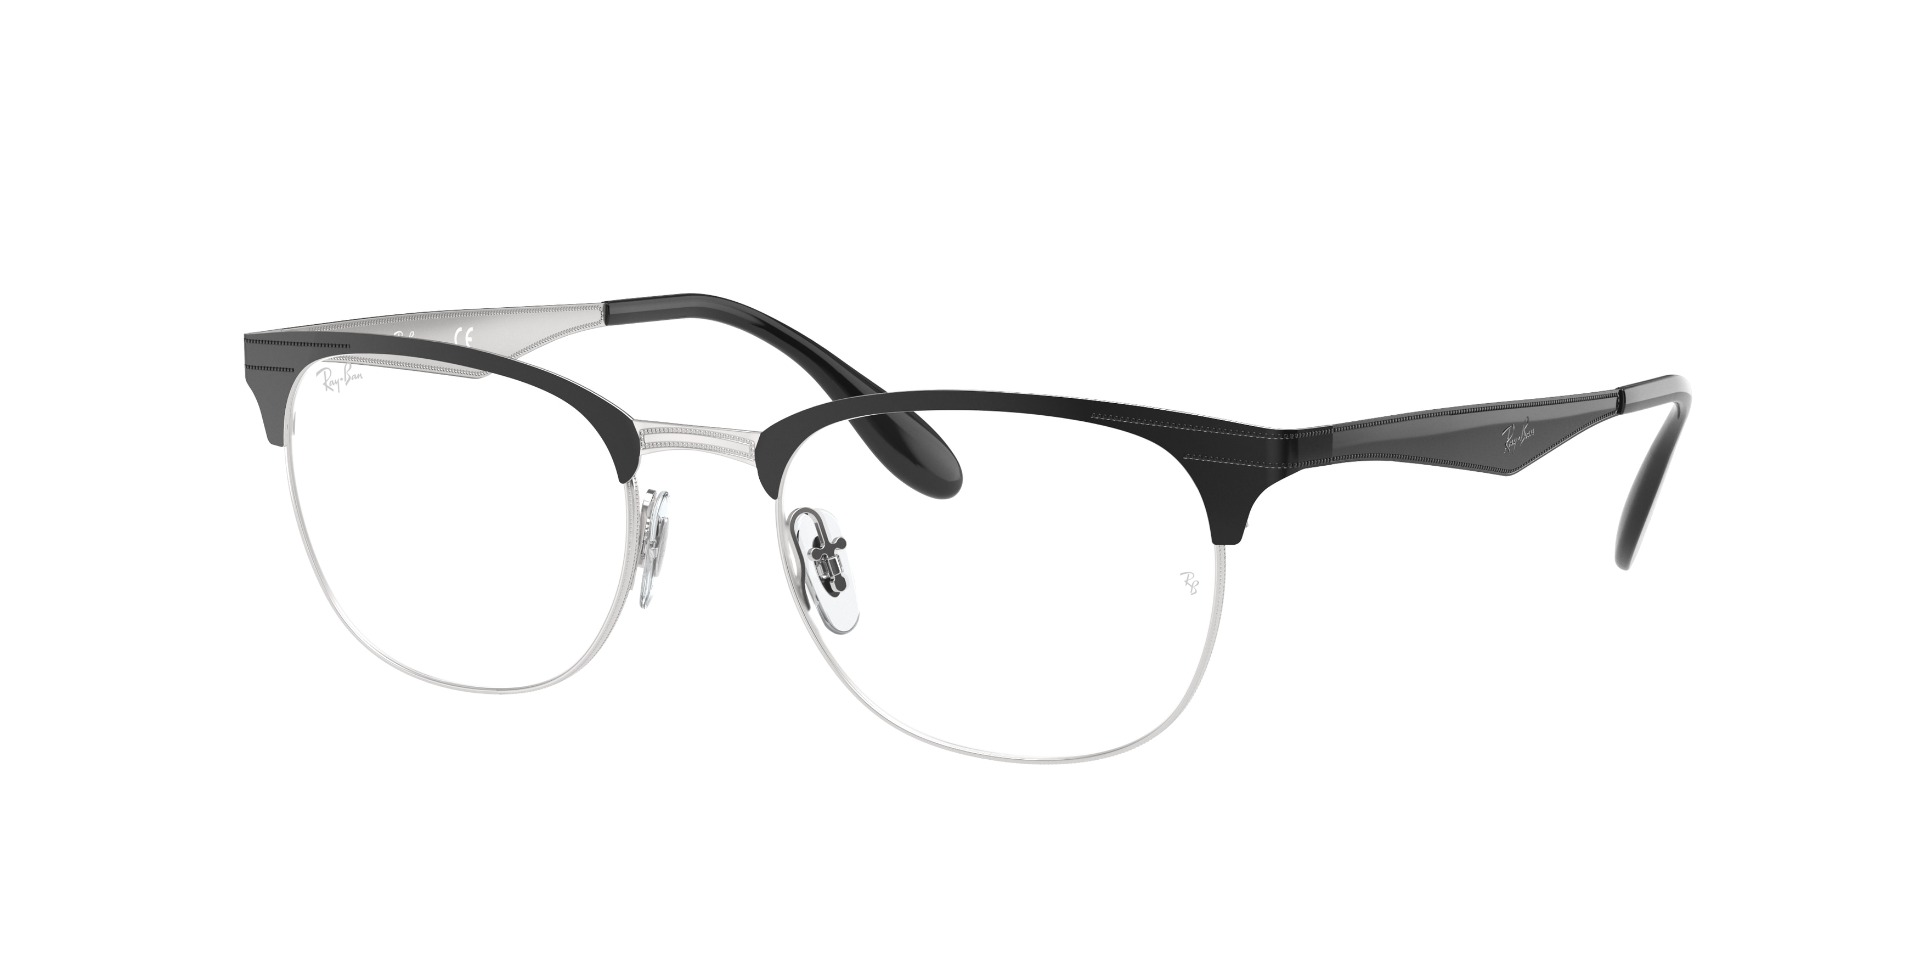 Ray-Ban RB6346 Eyeglasses Frames